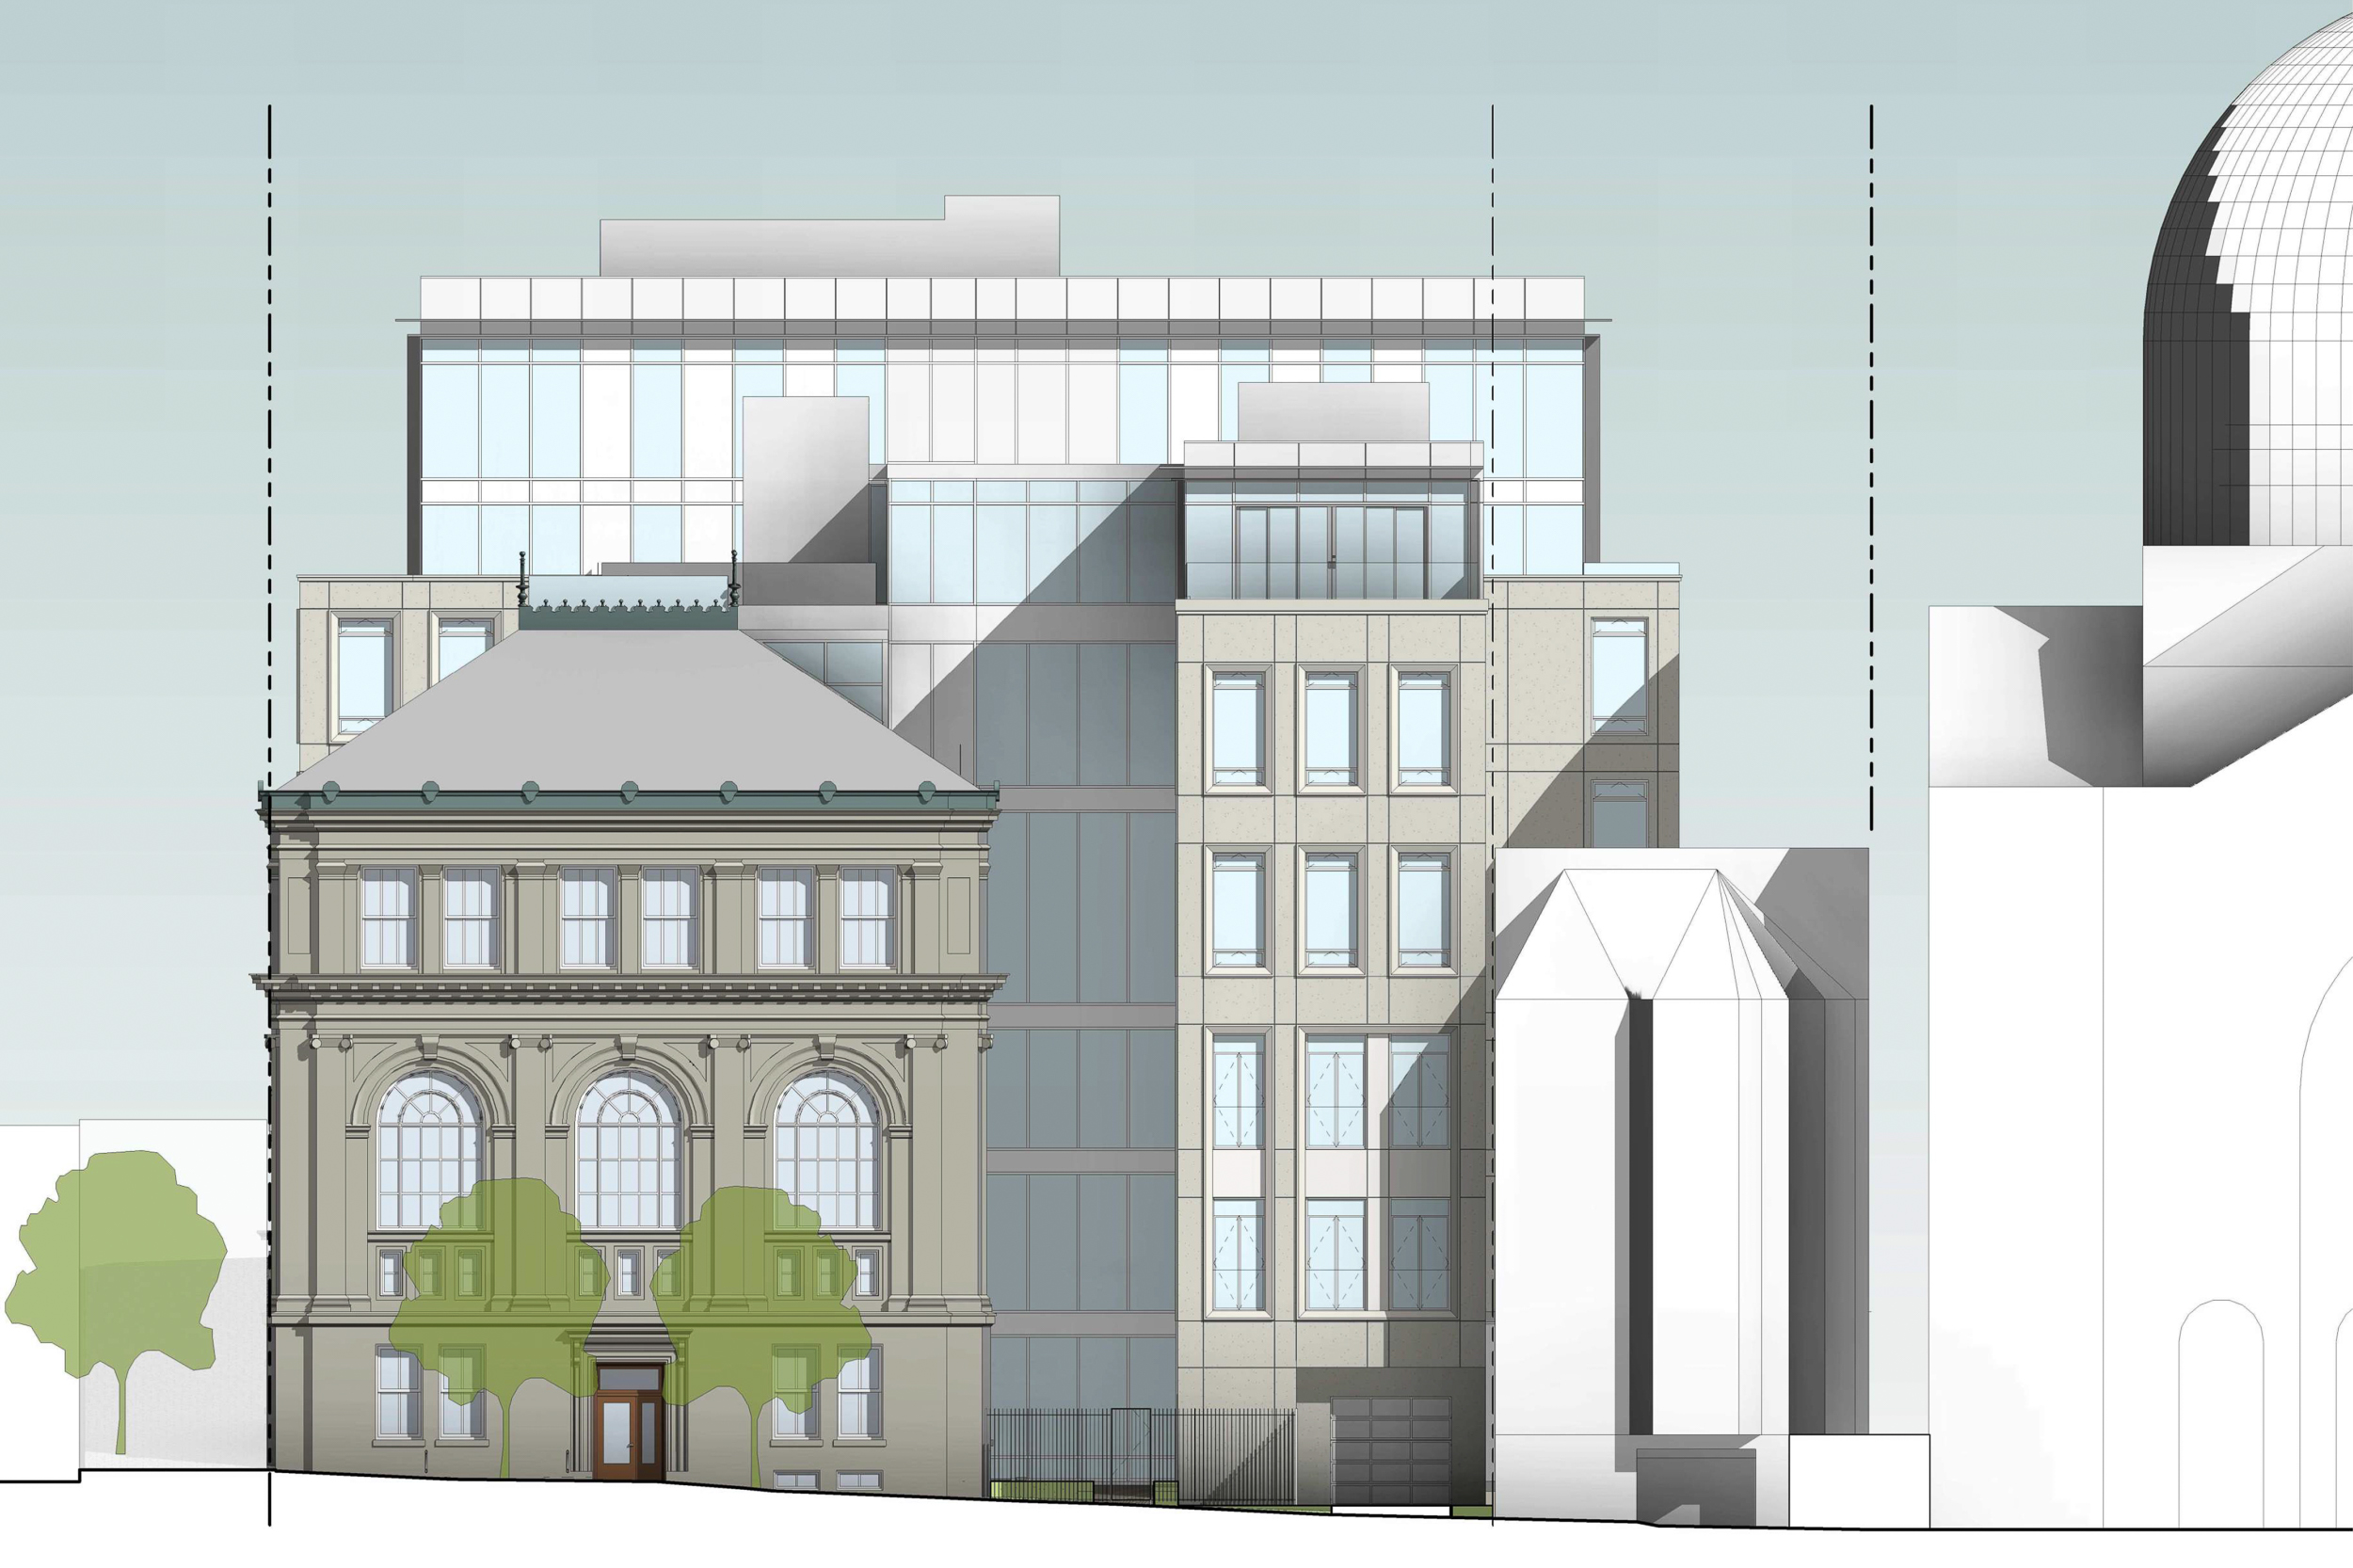 2395 Sacramento Street facade elevation, illustration by BAR Architects